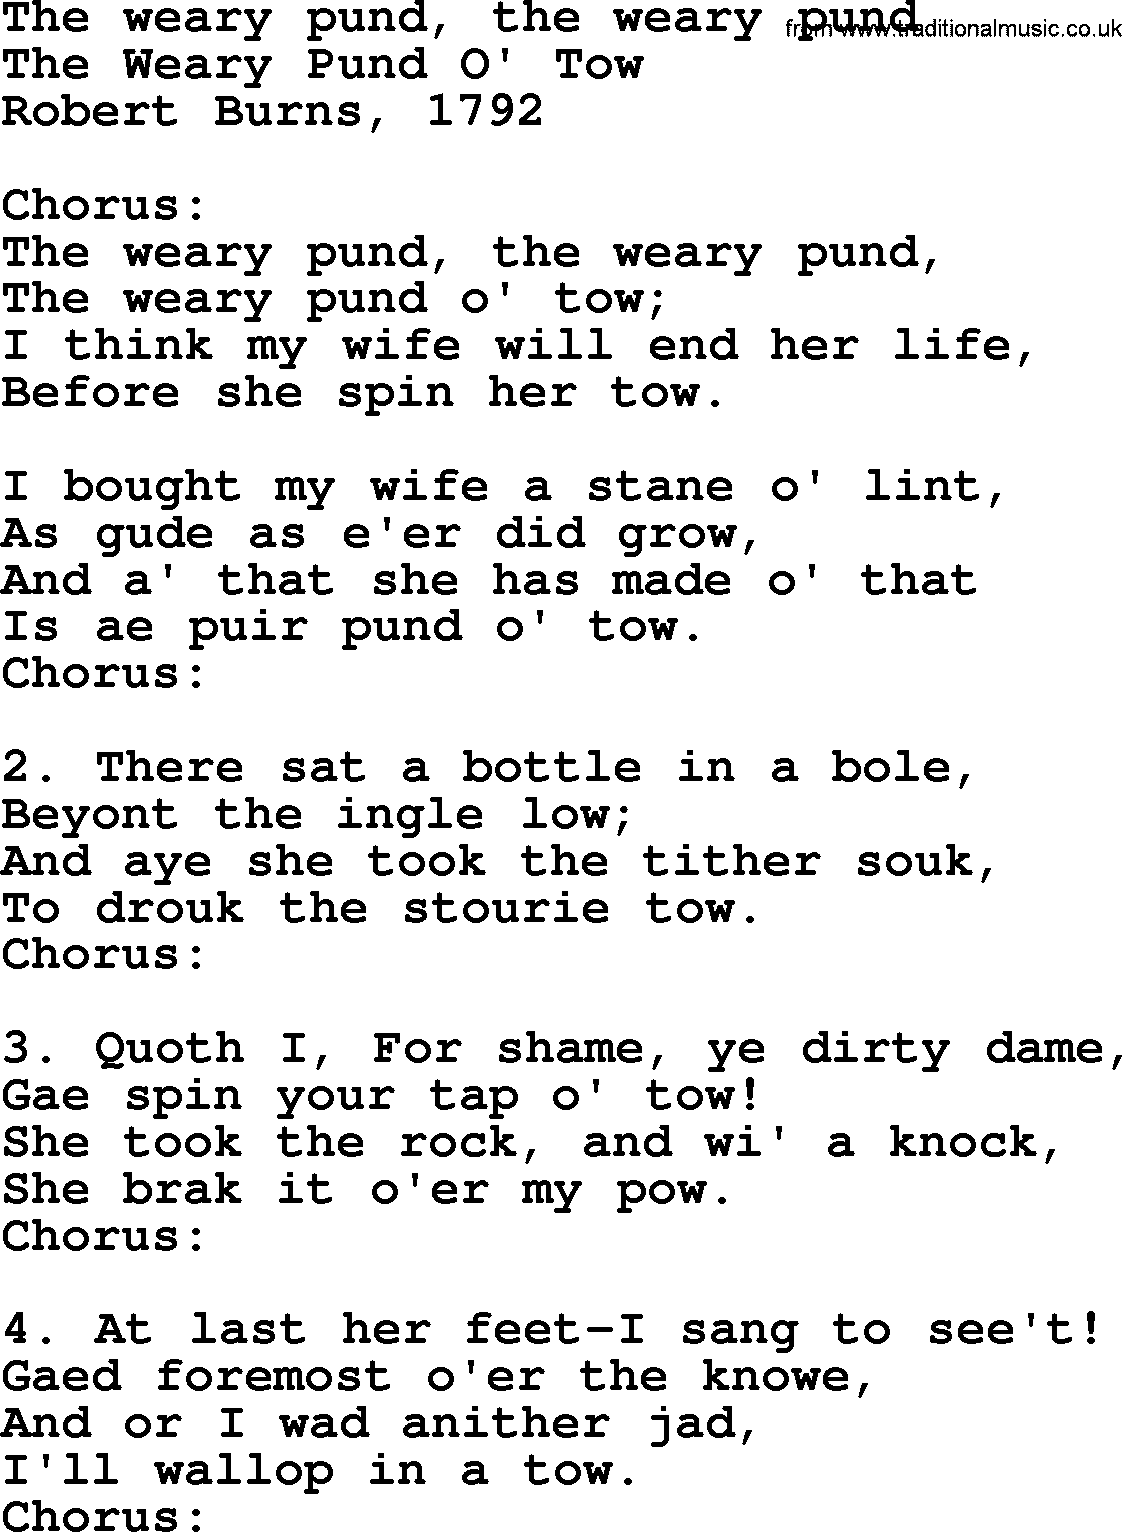 Robert Burns Songs & Lyrics: The Weary Pund, The Weary Pund